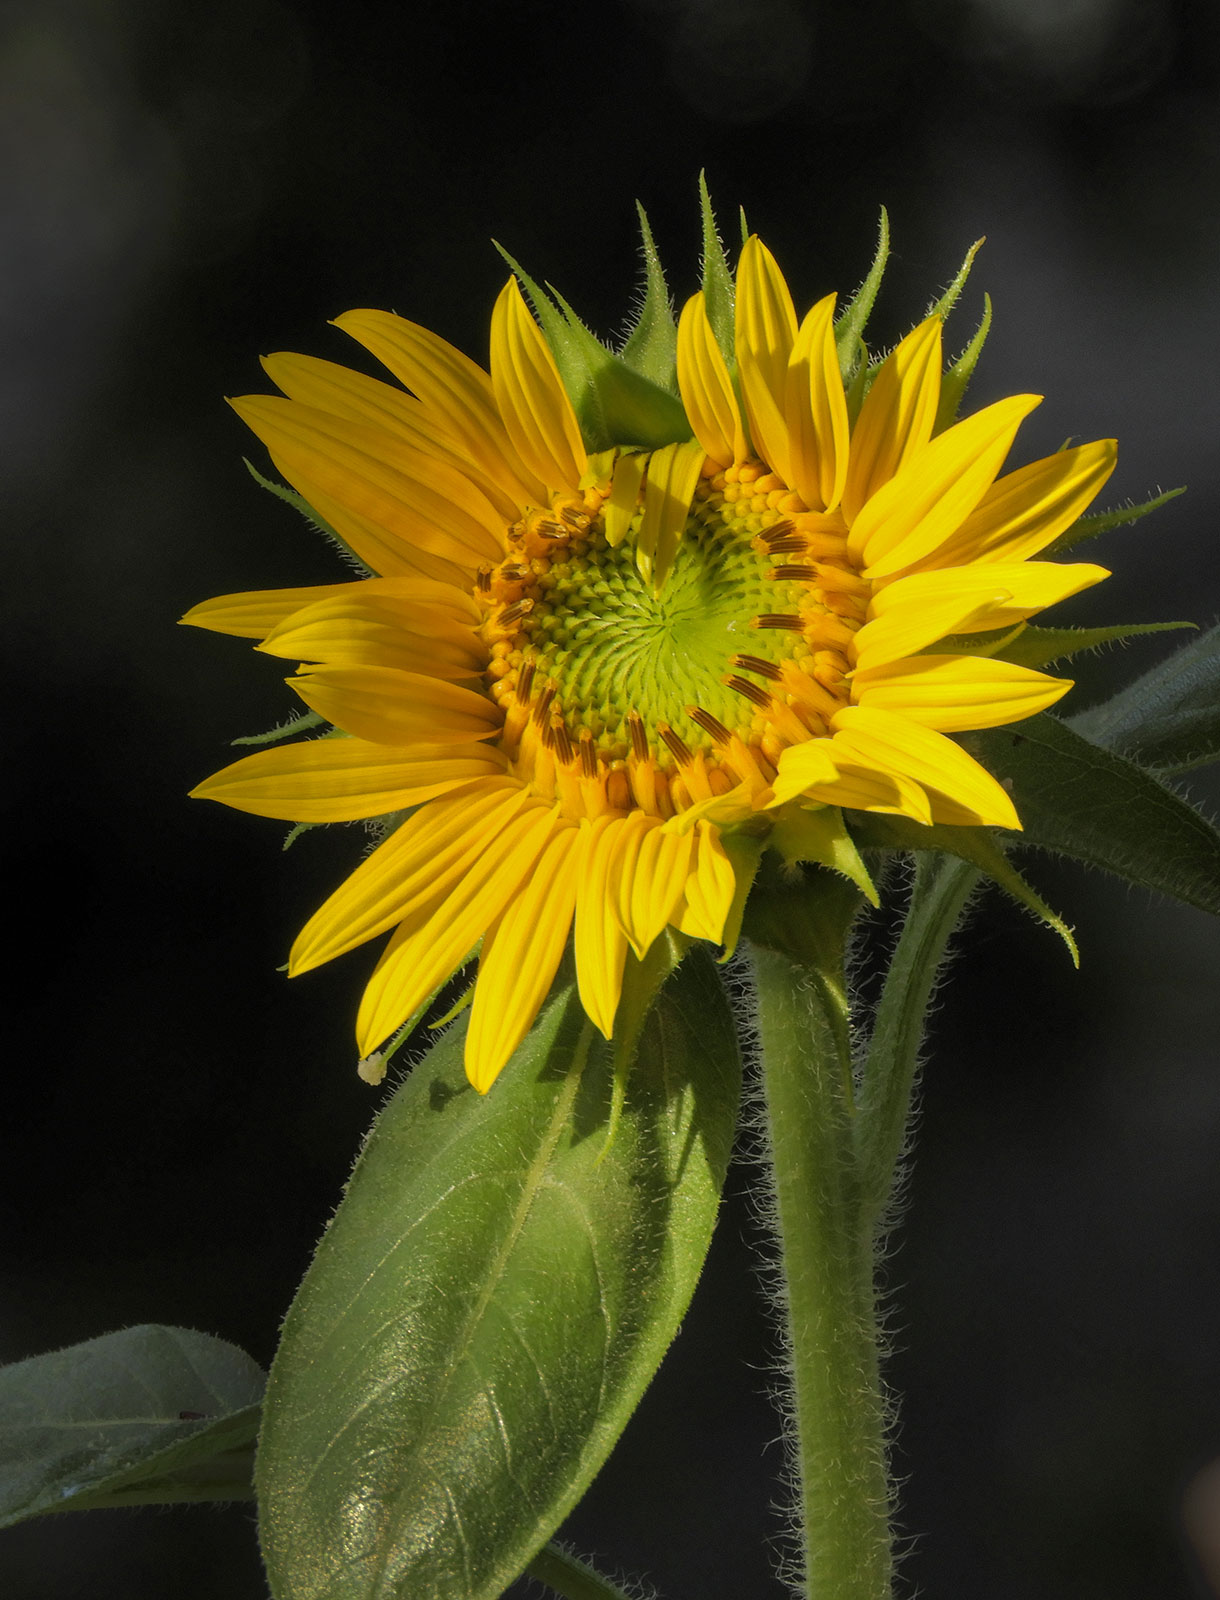 sunflower2